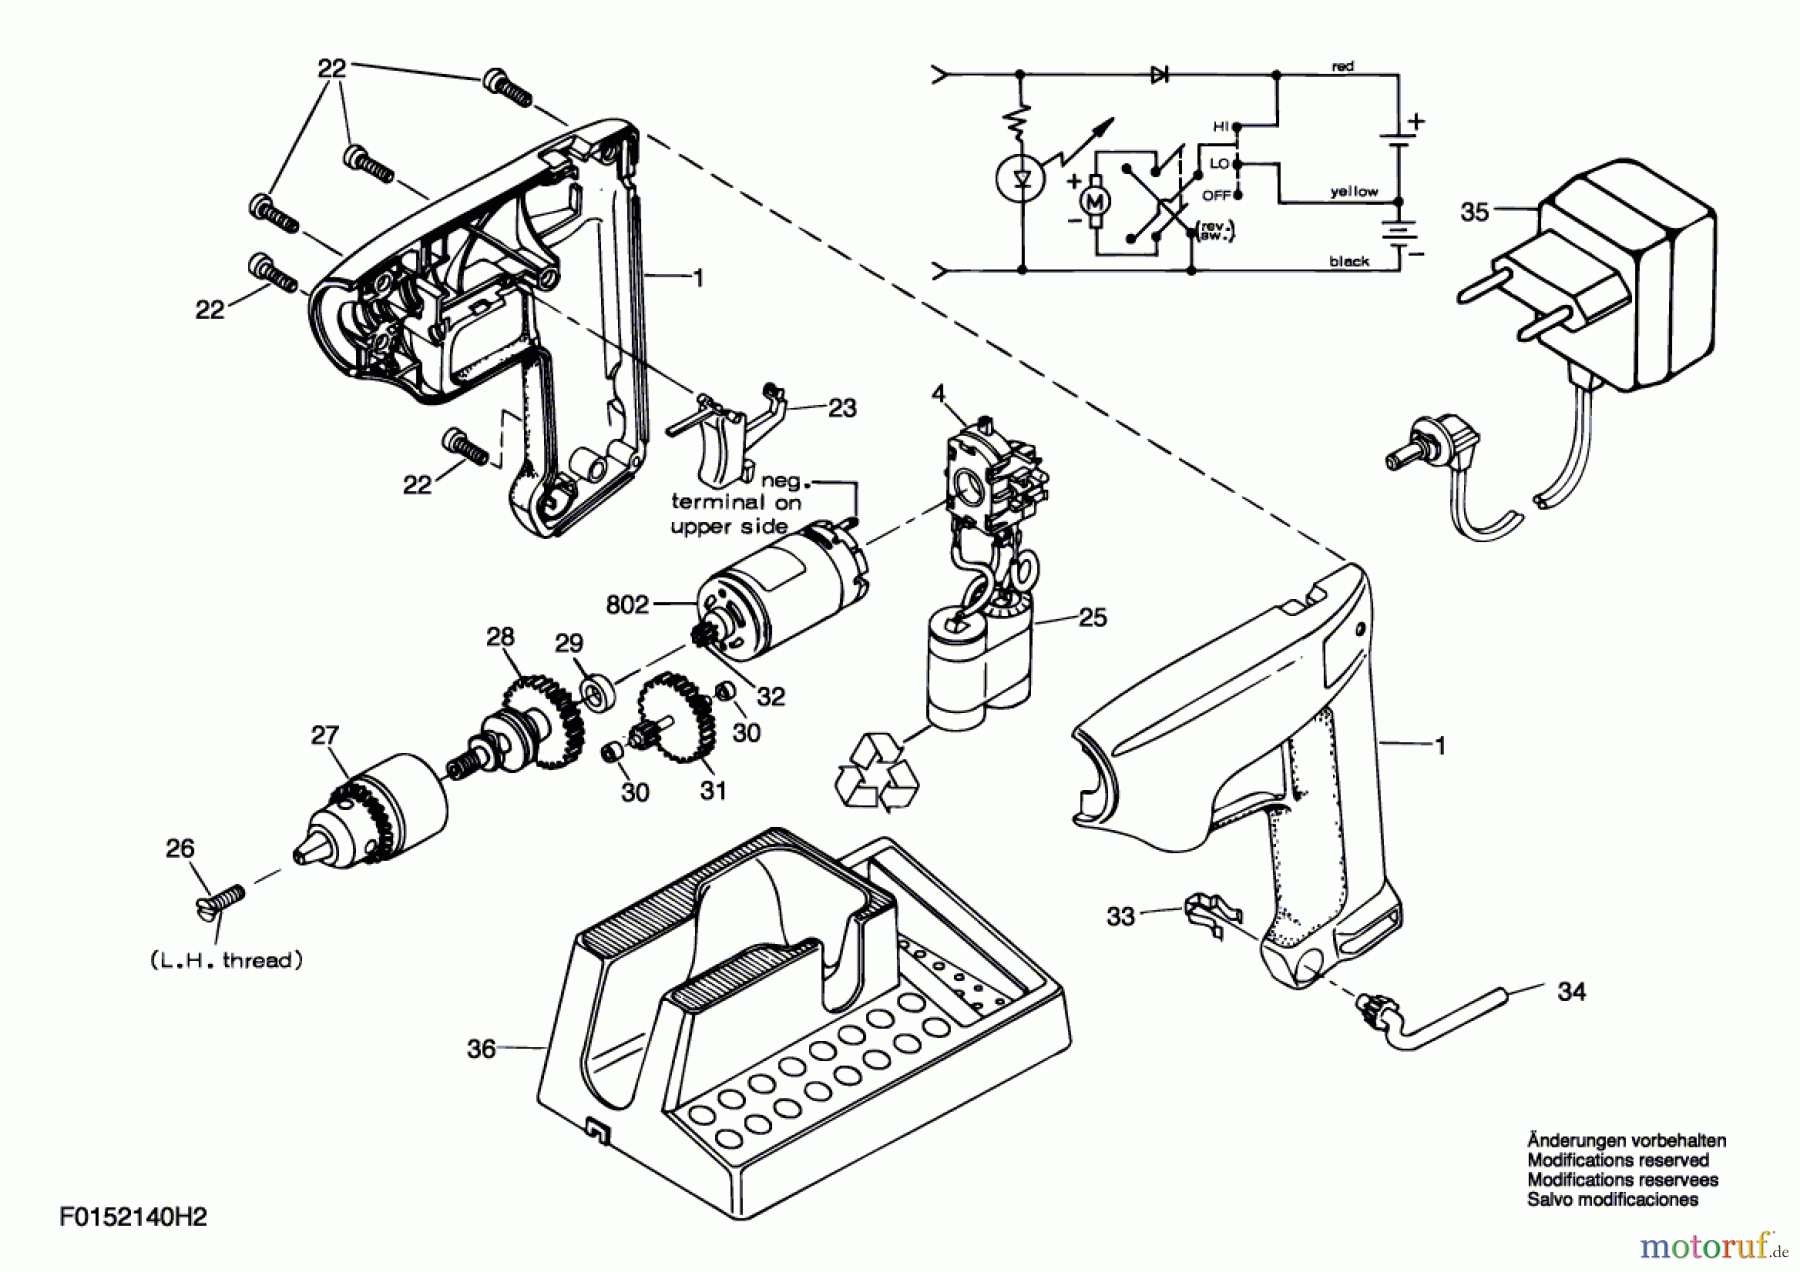  Bosch Akku Werkzeug Gw-Akku-Bohrmaschine 2140 Seite 1